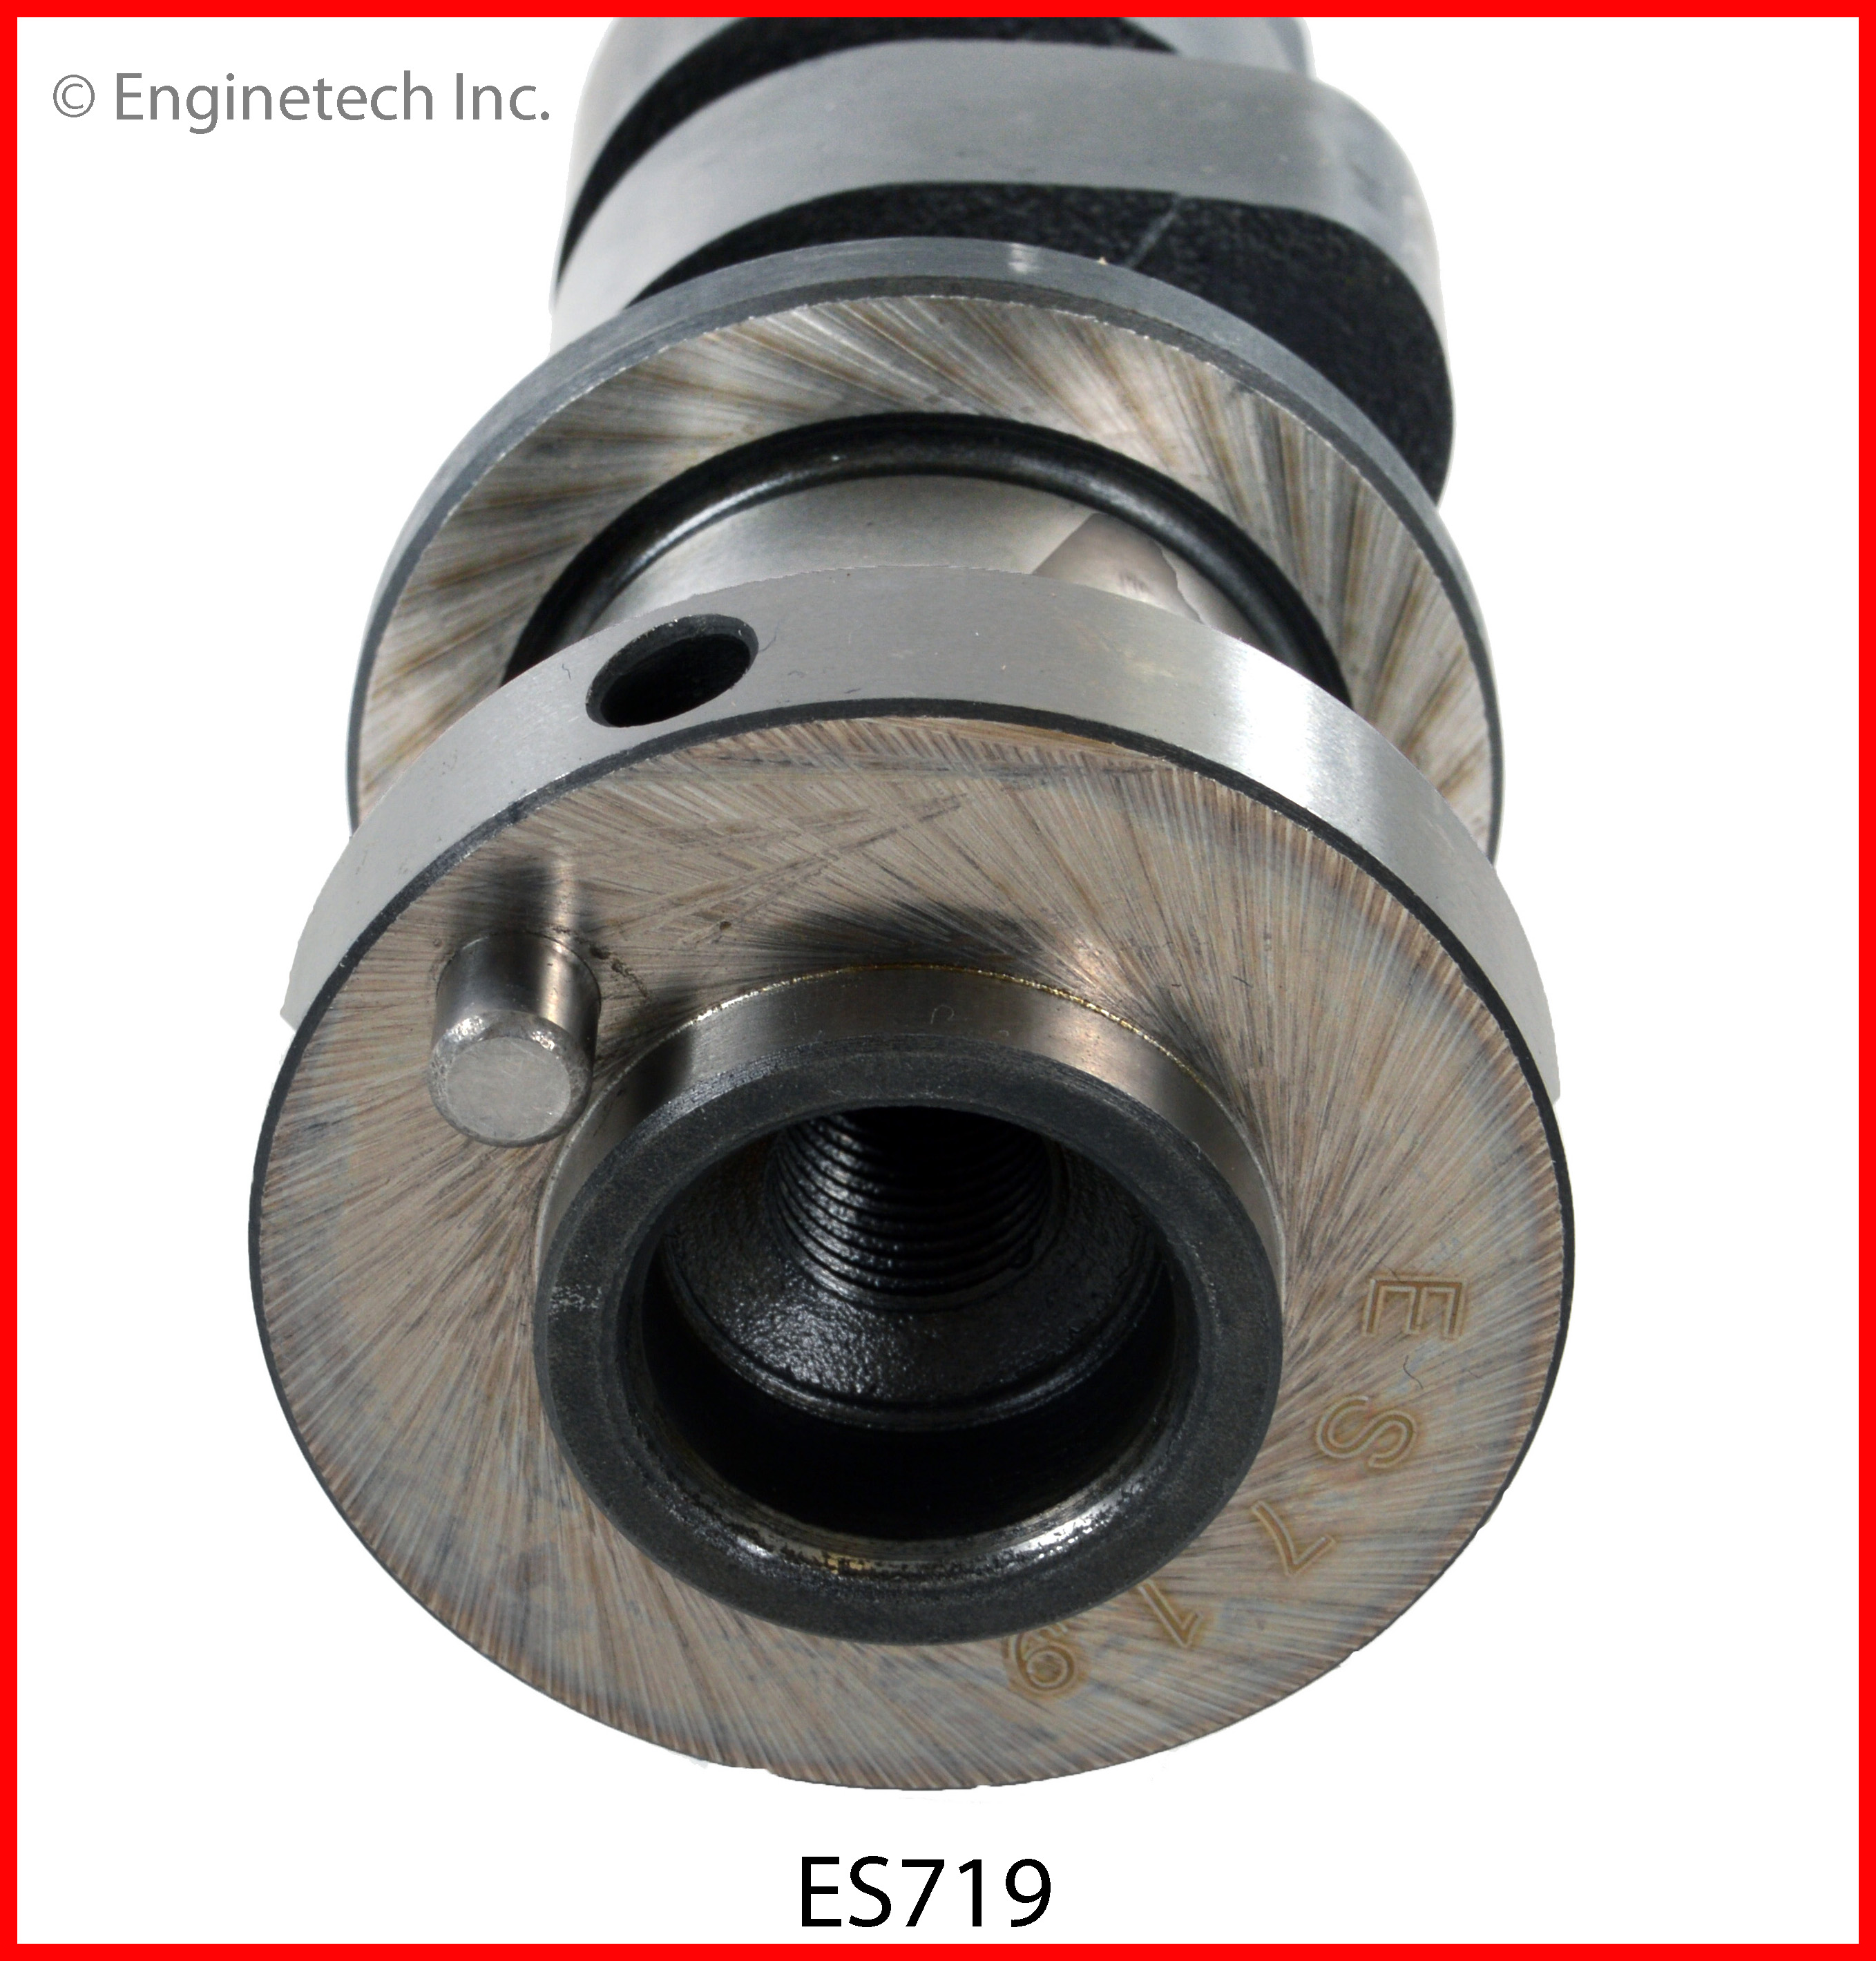 ES719 Camshaft - Stock Enginetech